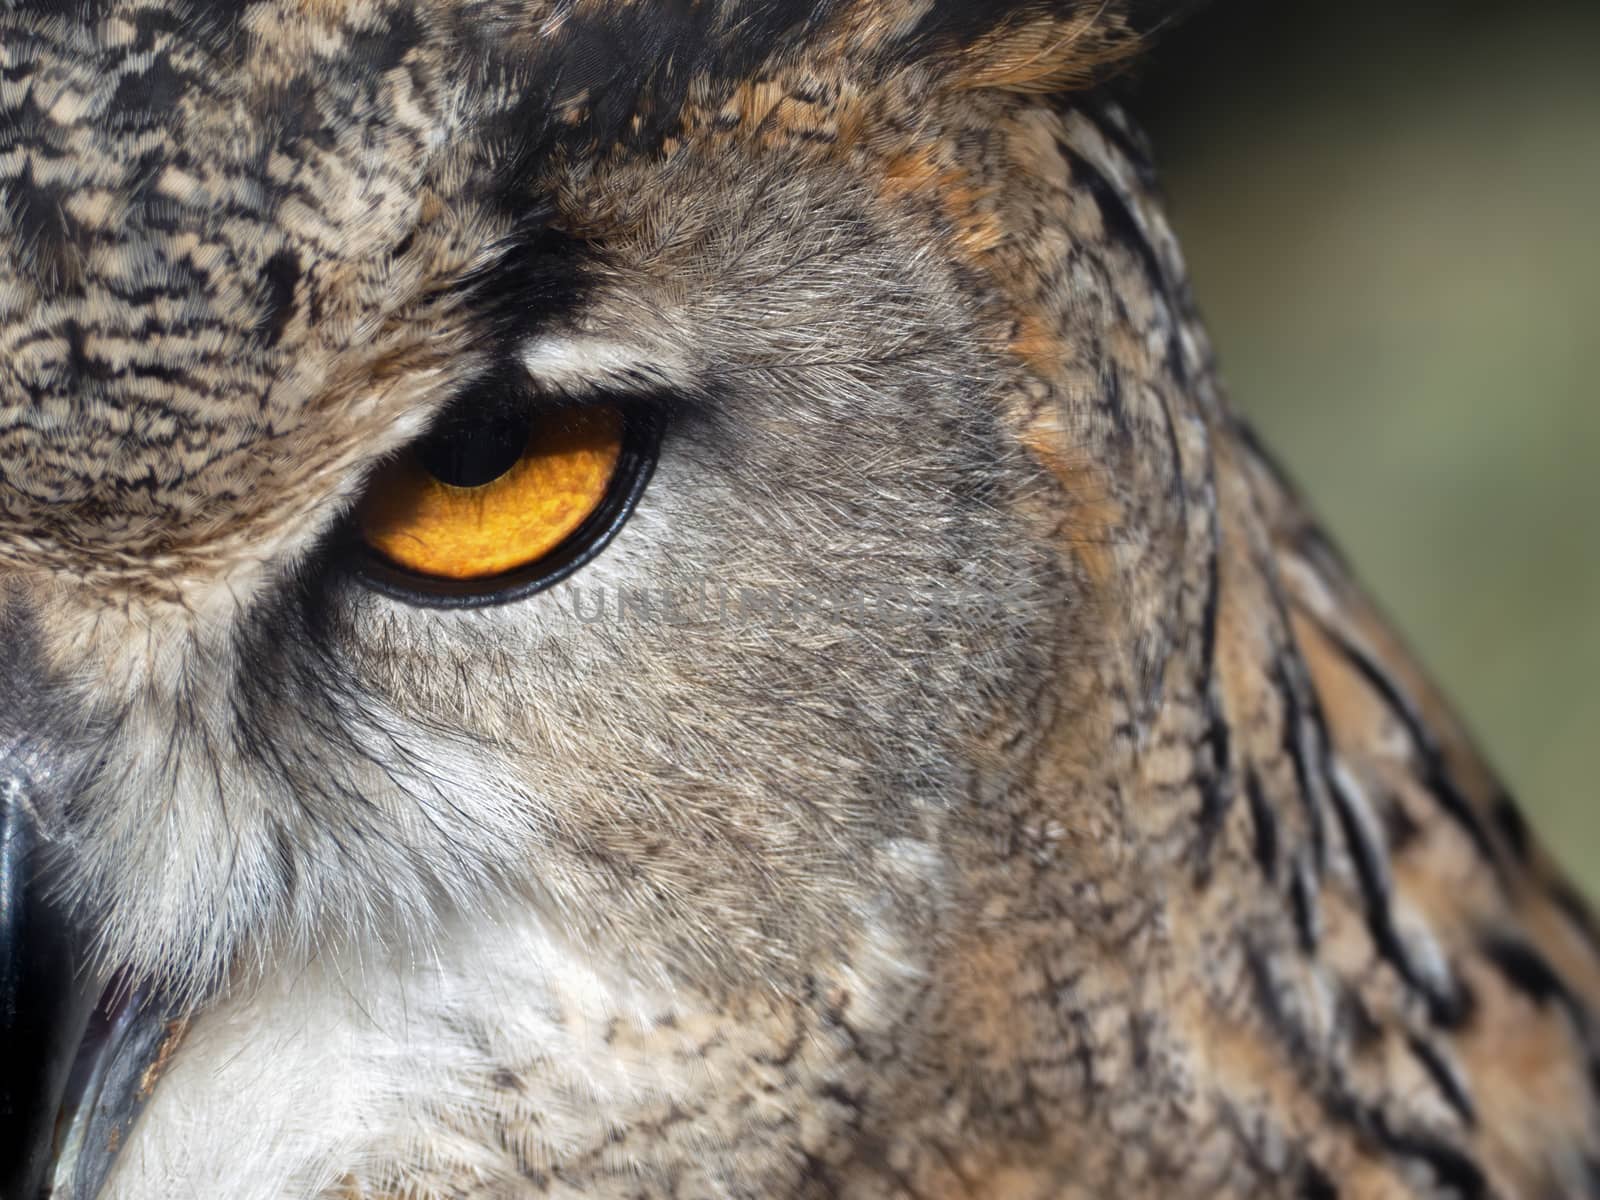 Owl's eye by Rik